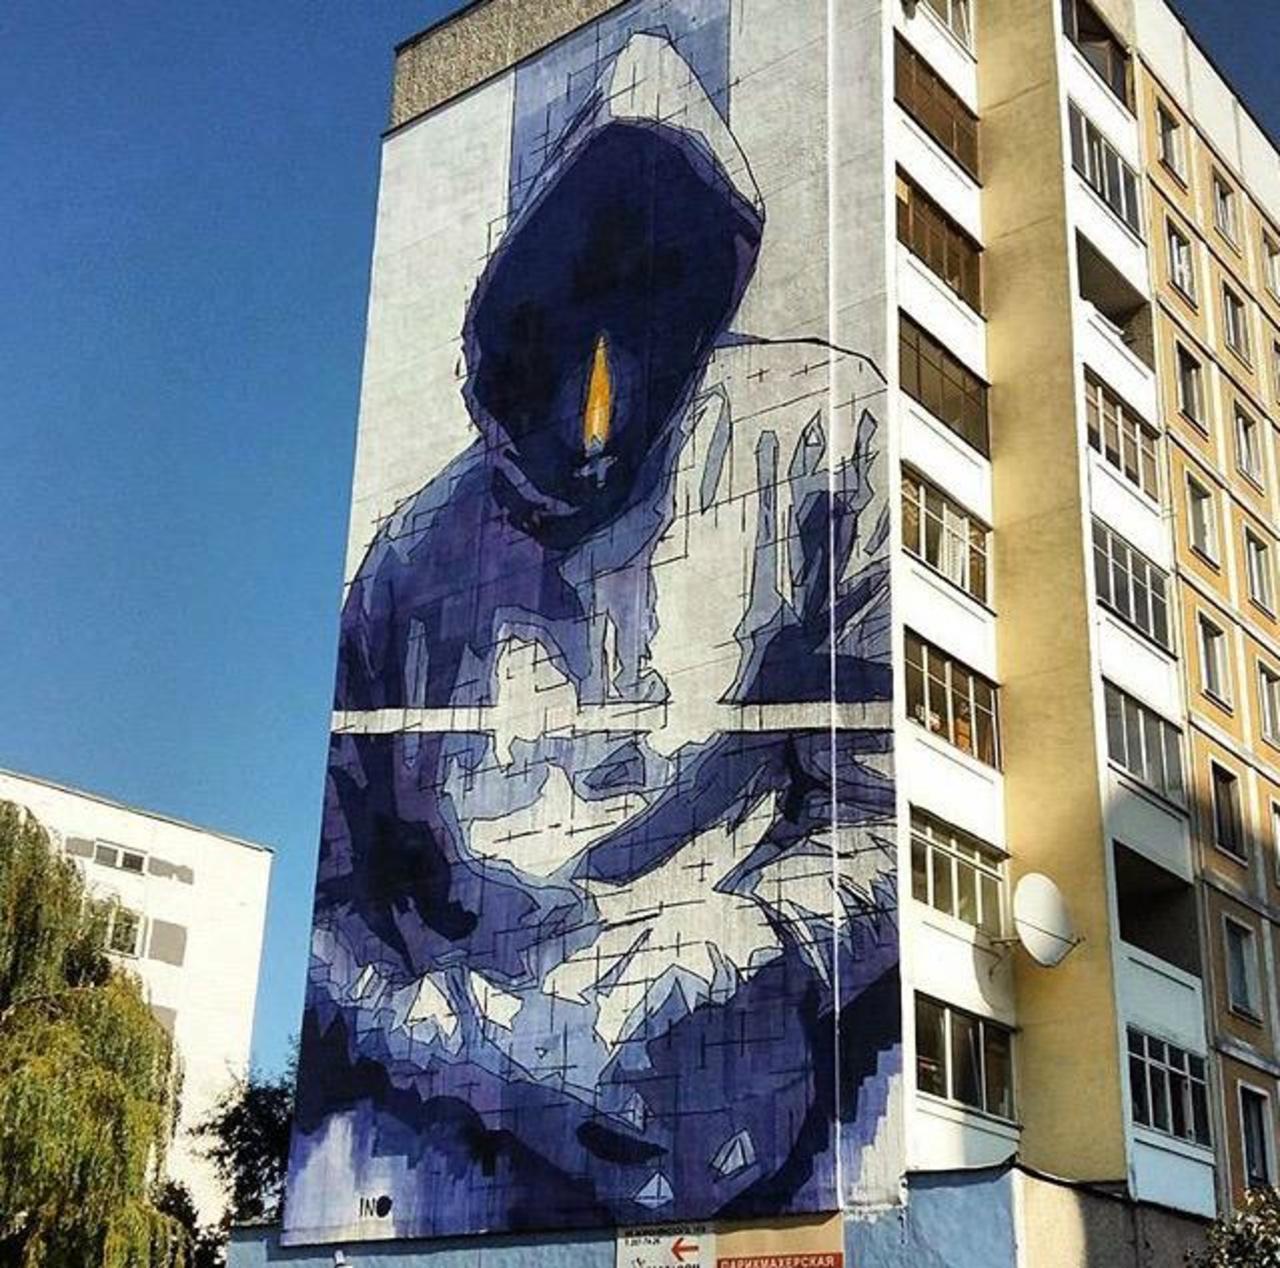 RT @jpaine: 'Man With No Name' 
New Street Art by iNO in Minsk, Belarus 

#art #graffiti #mural #streetart http://t.co/aVrxESVOwD